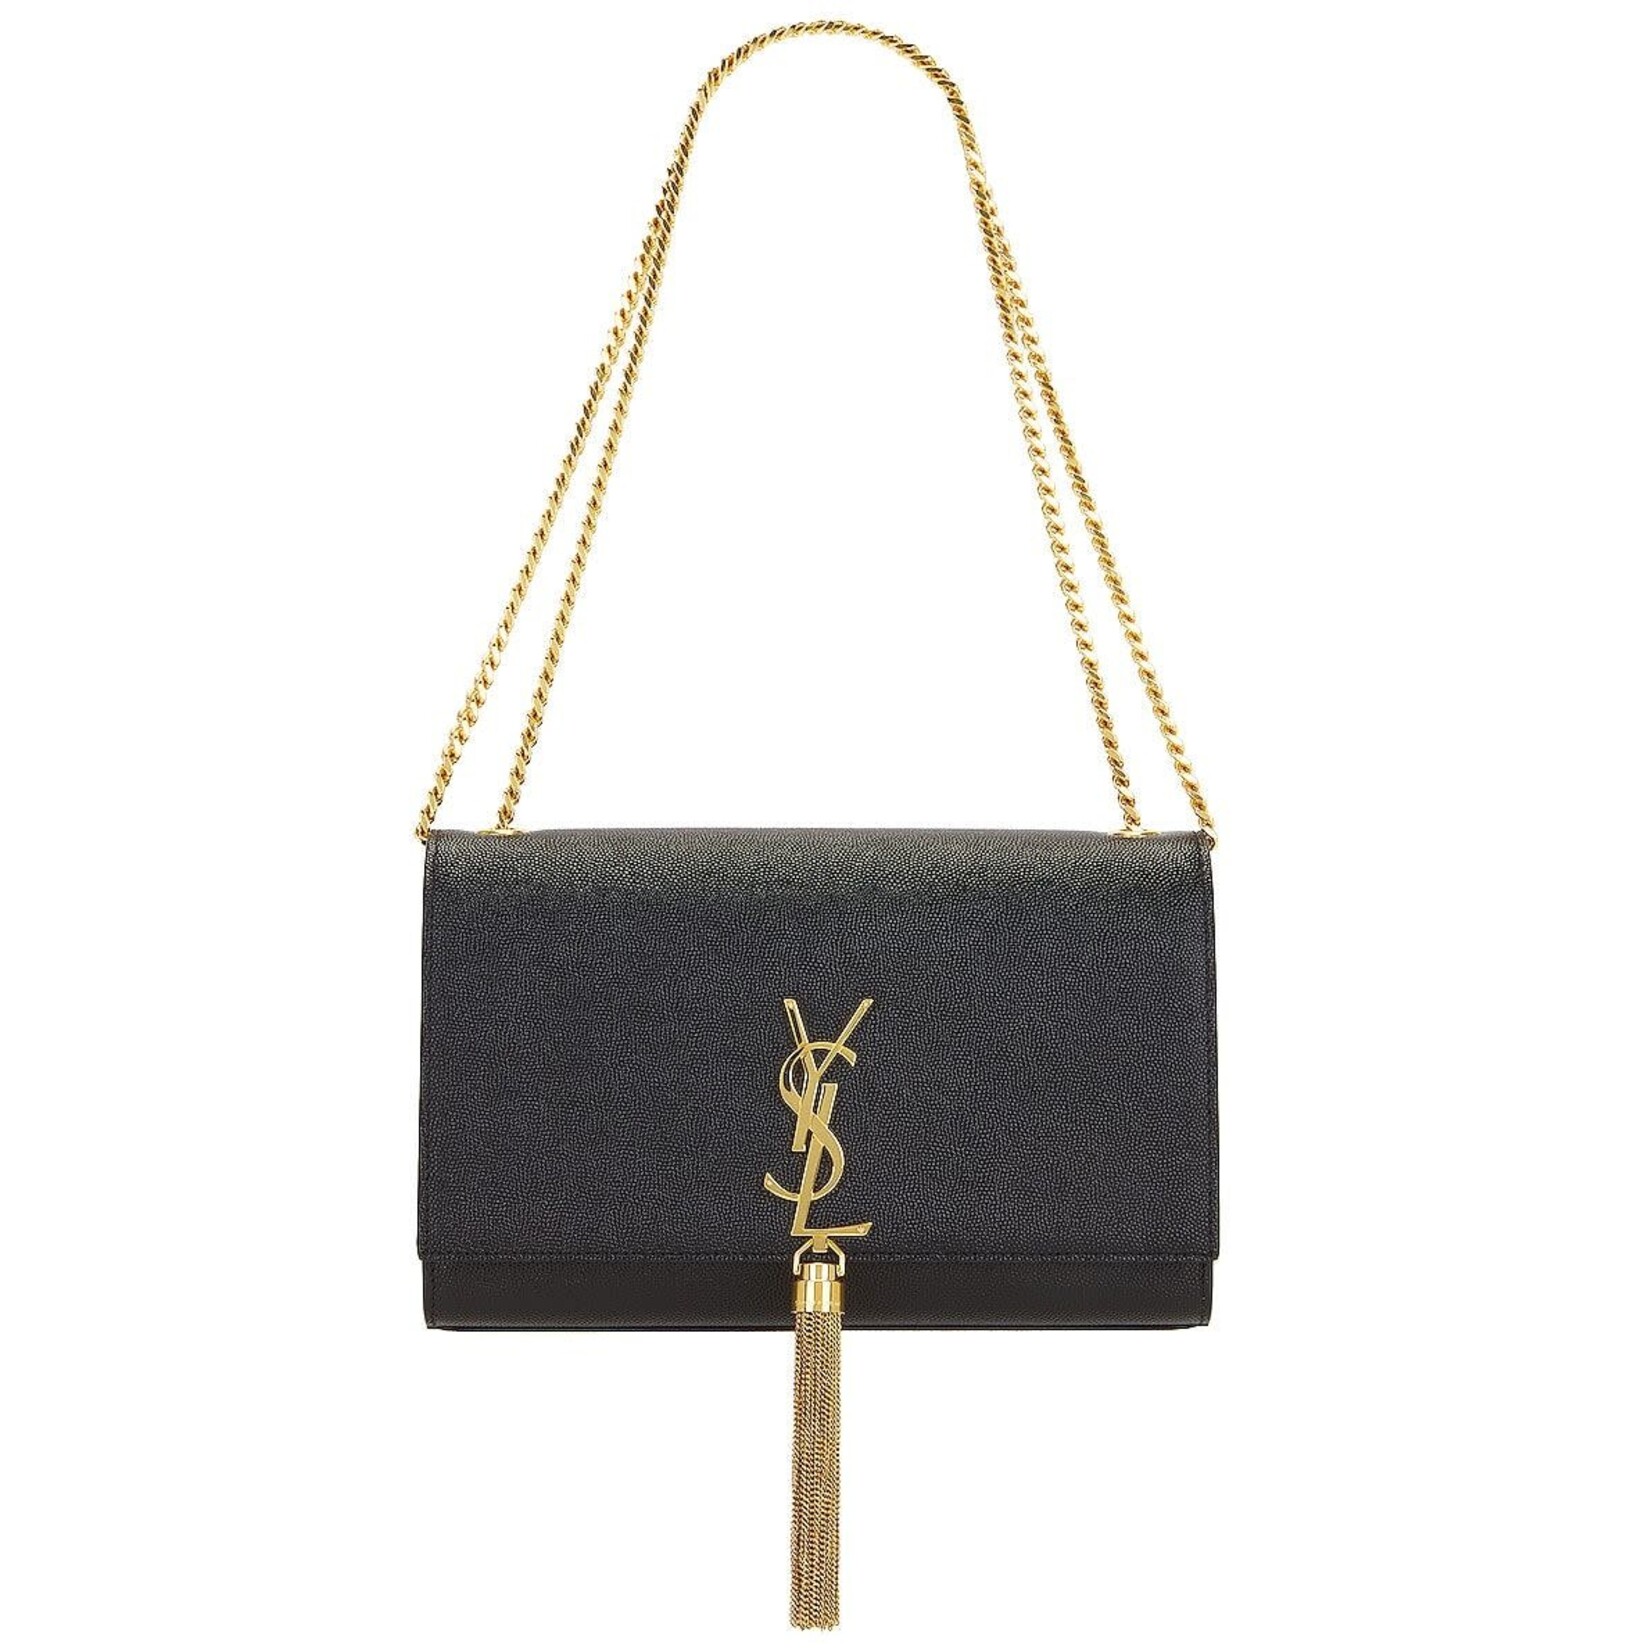 YSL Saint Laurent Small Kate tassel chain bag